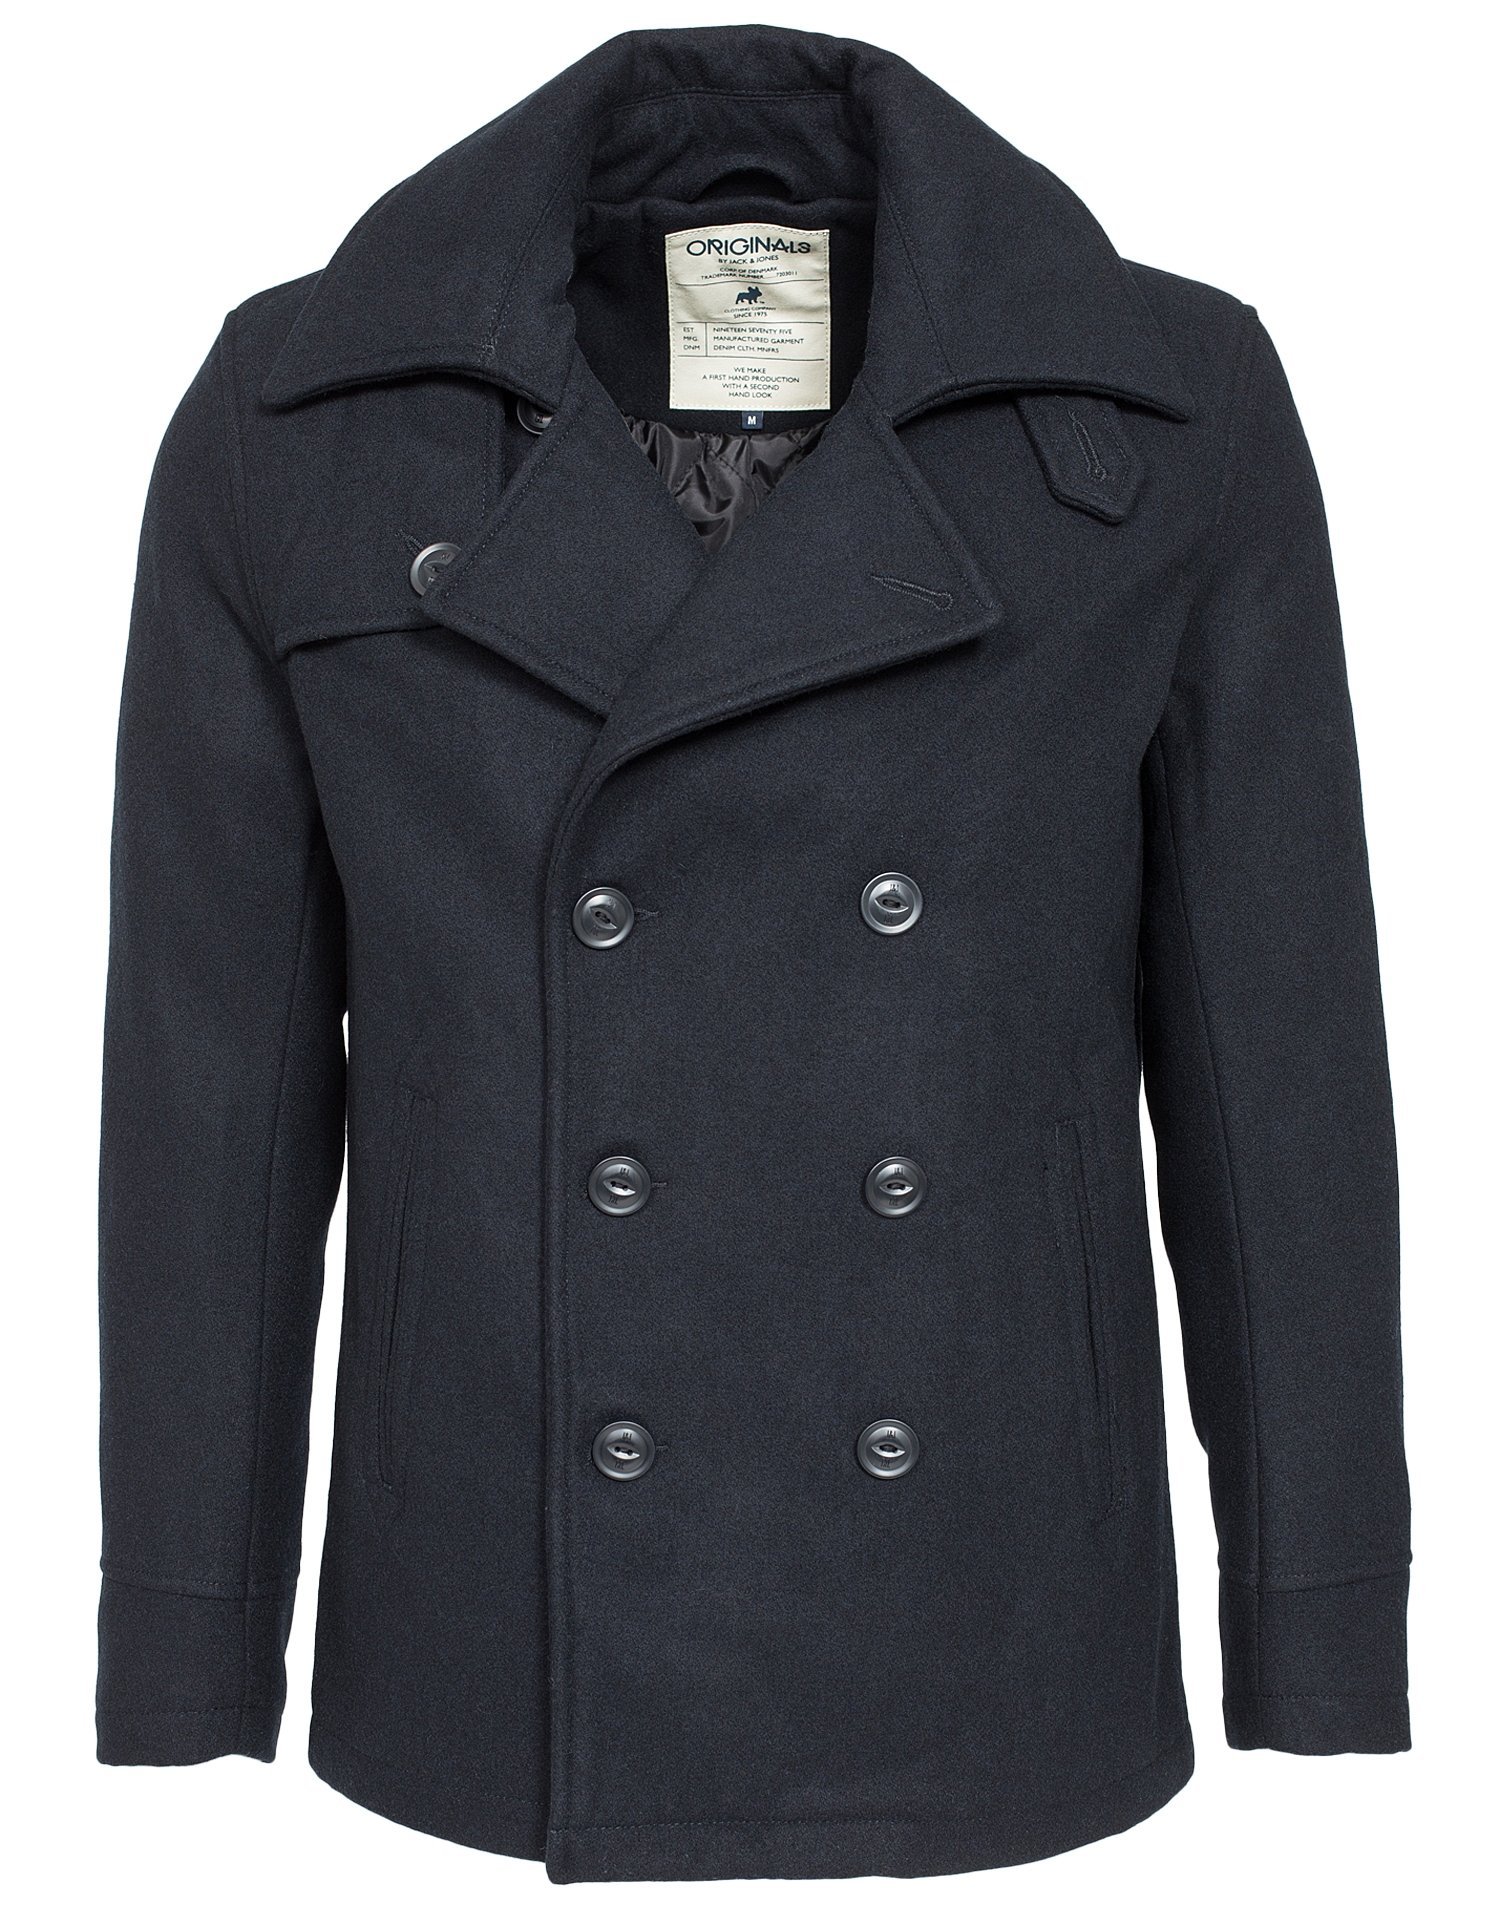 Frost Wool Jacket - Jack & Jones - Black Navy - Jackets - Clothing ...